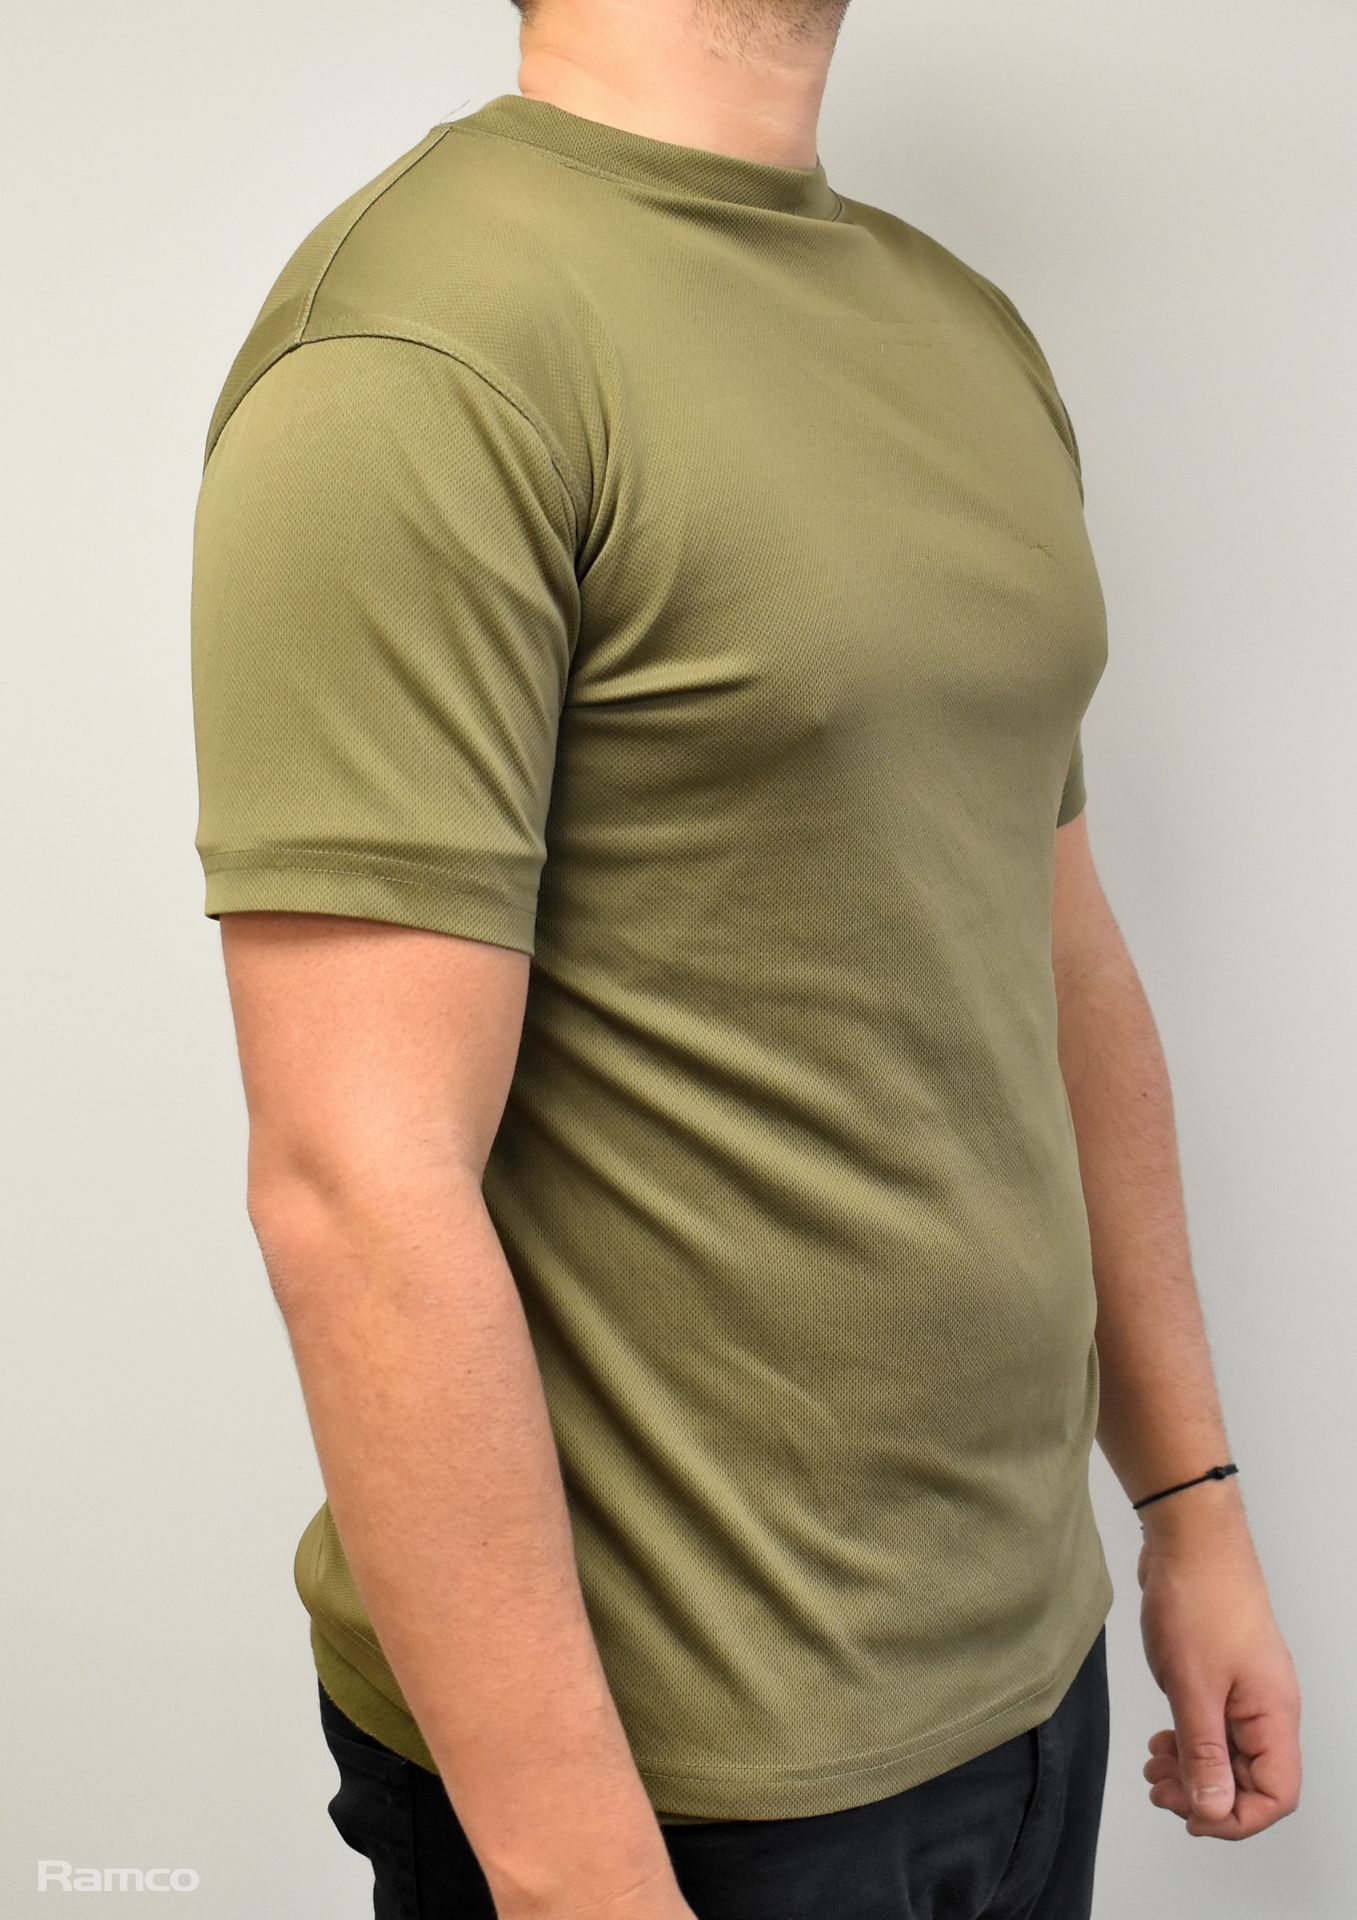 50x British Army combat T-shirts anti static - mixed grades and sizes - Image 4 of 12